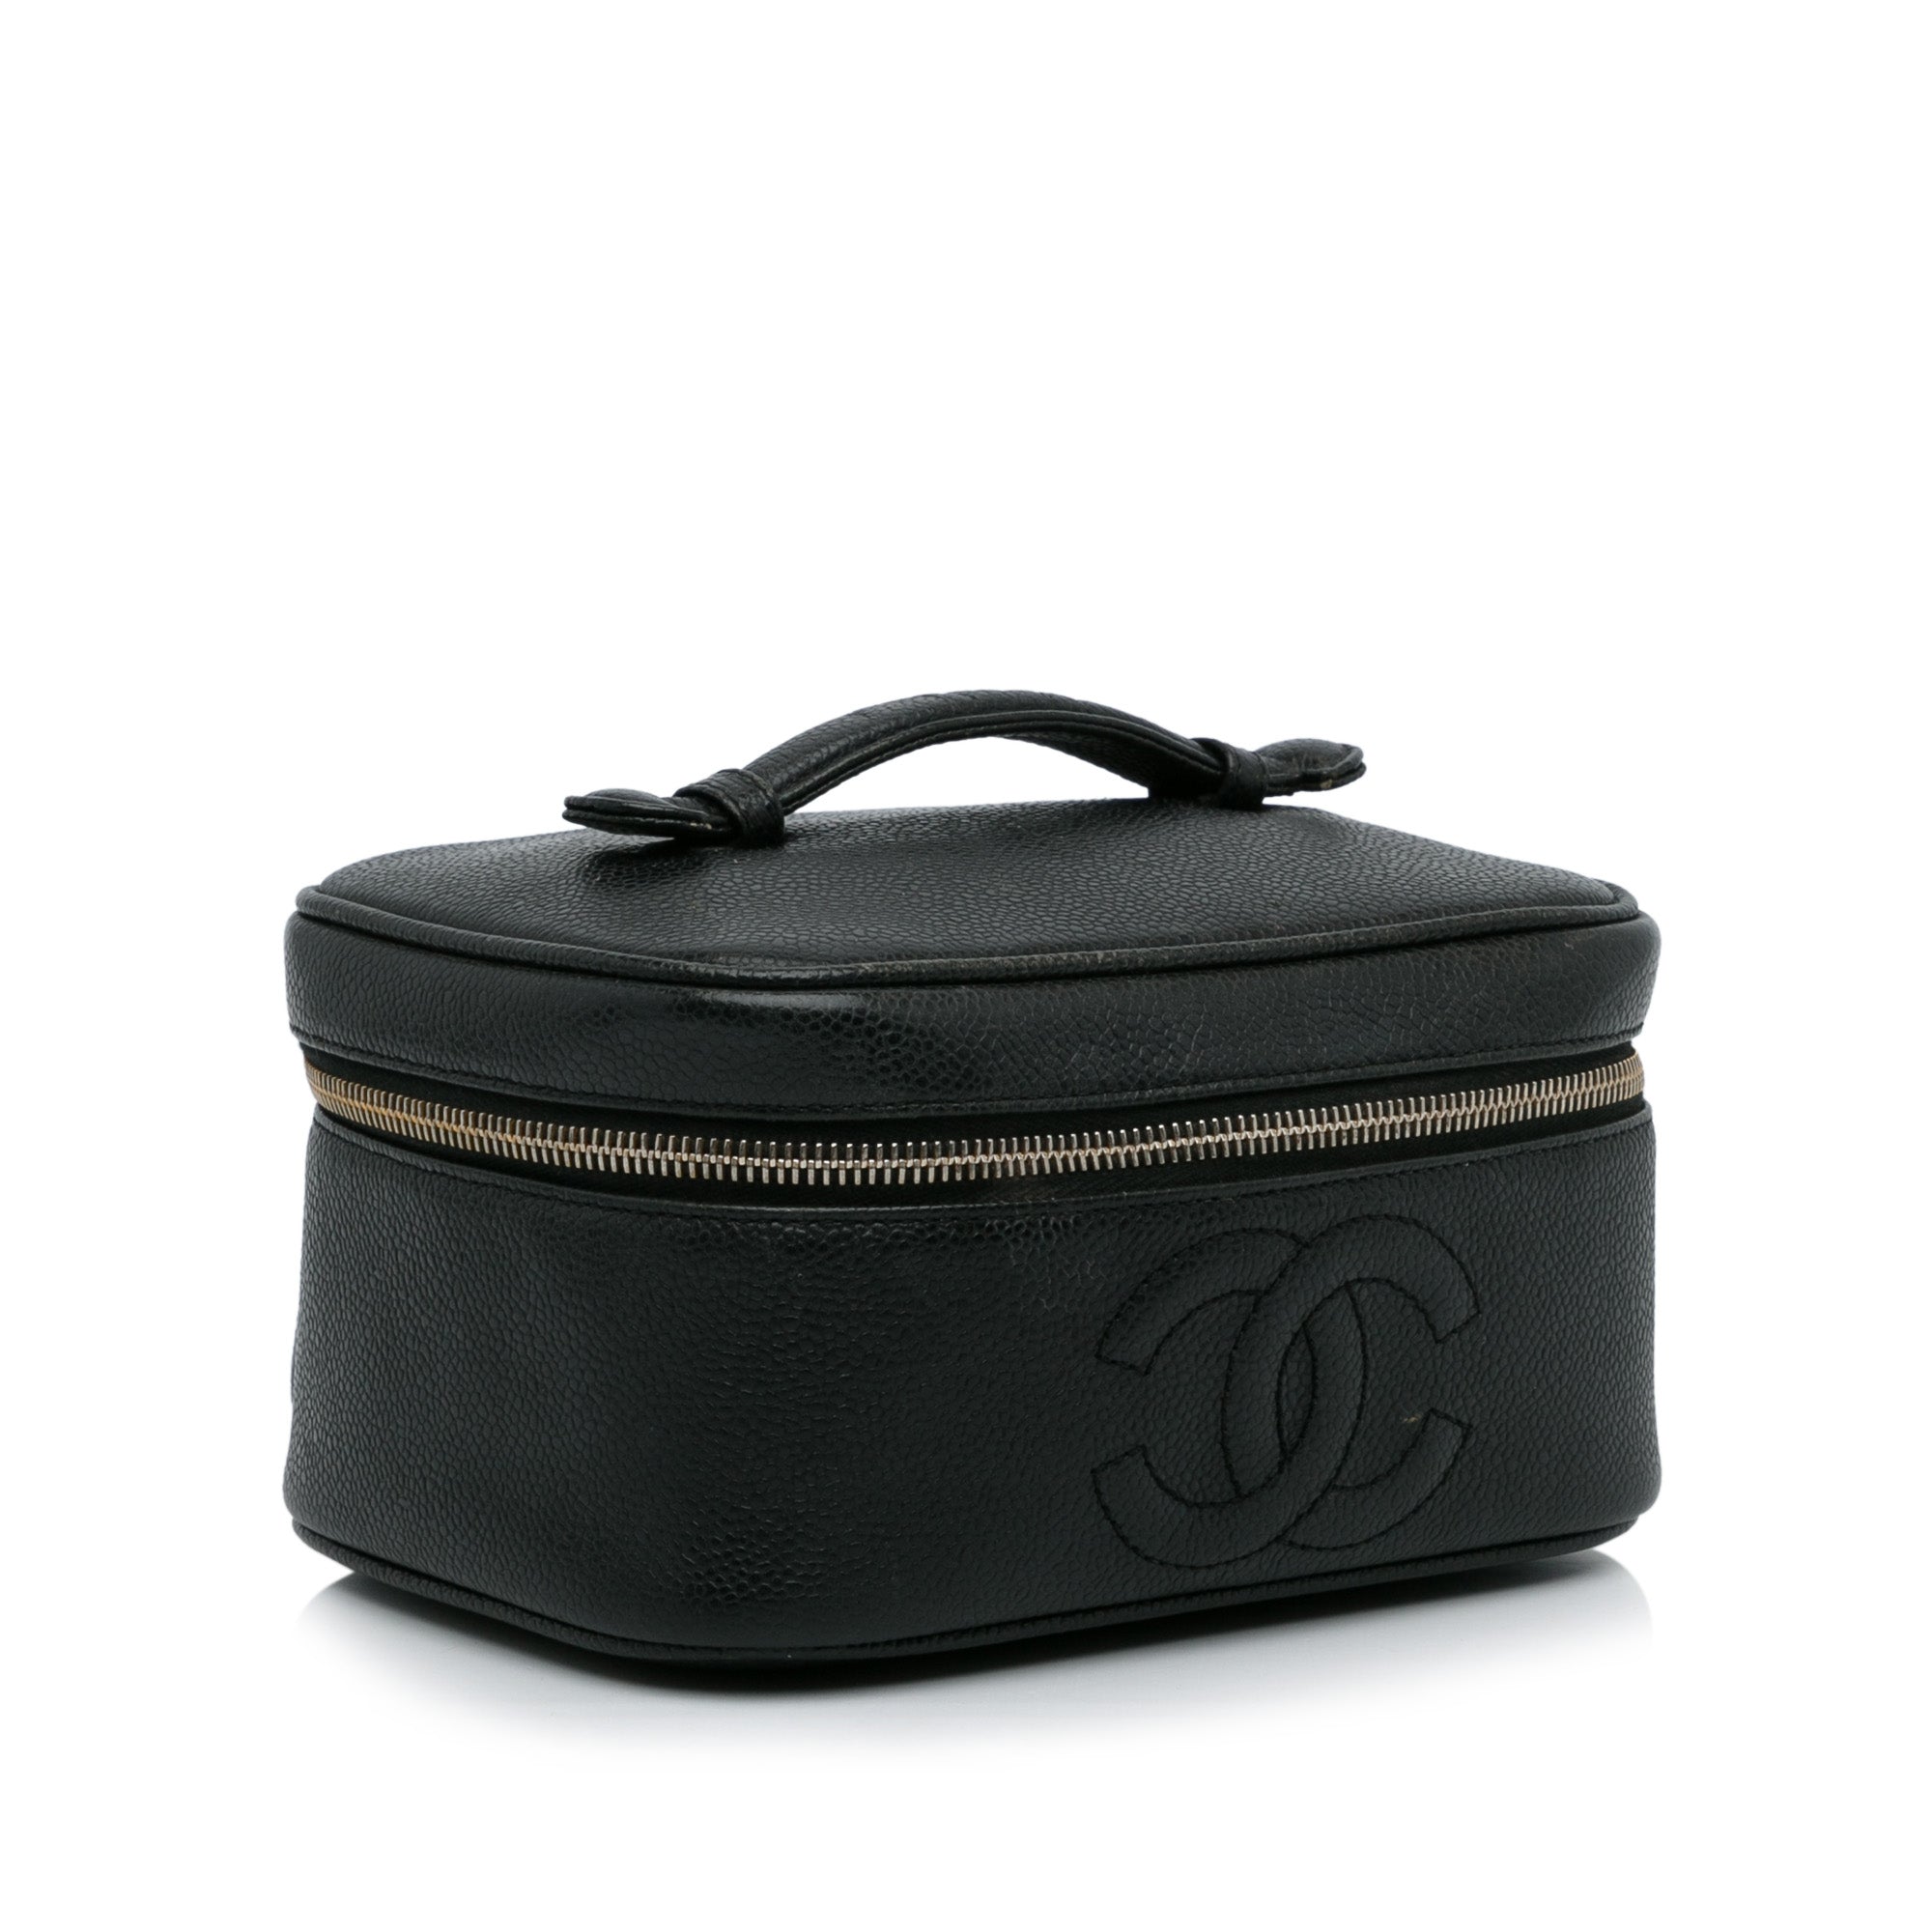 Vintage Chanel Vanity Case Bag in Black Patent Leather (1994/1996